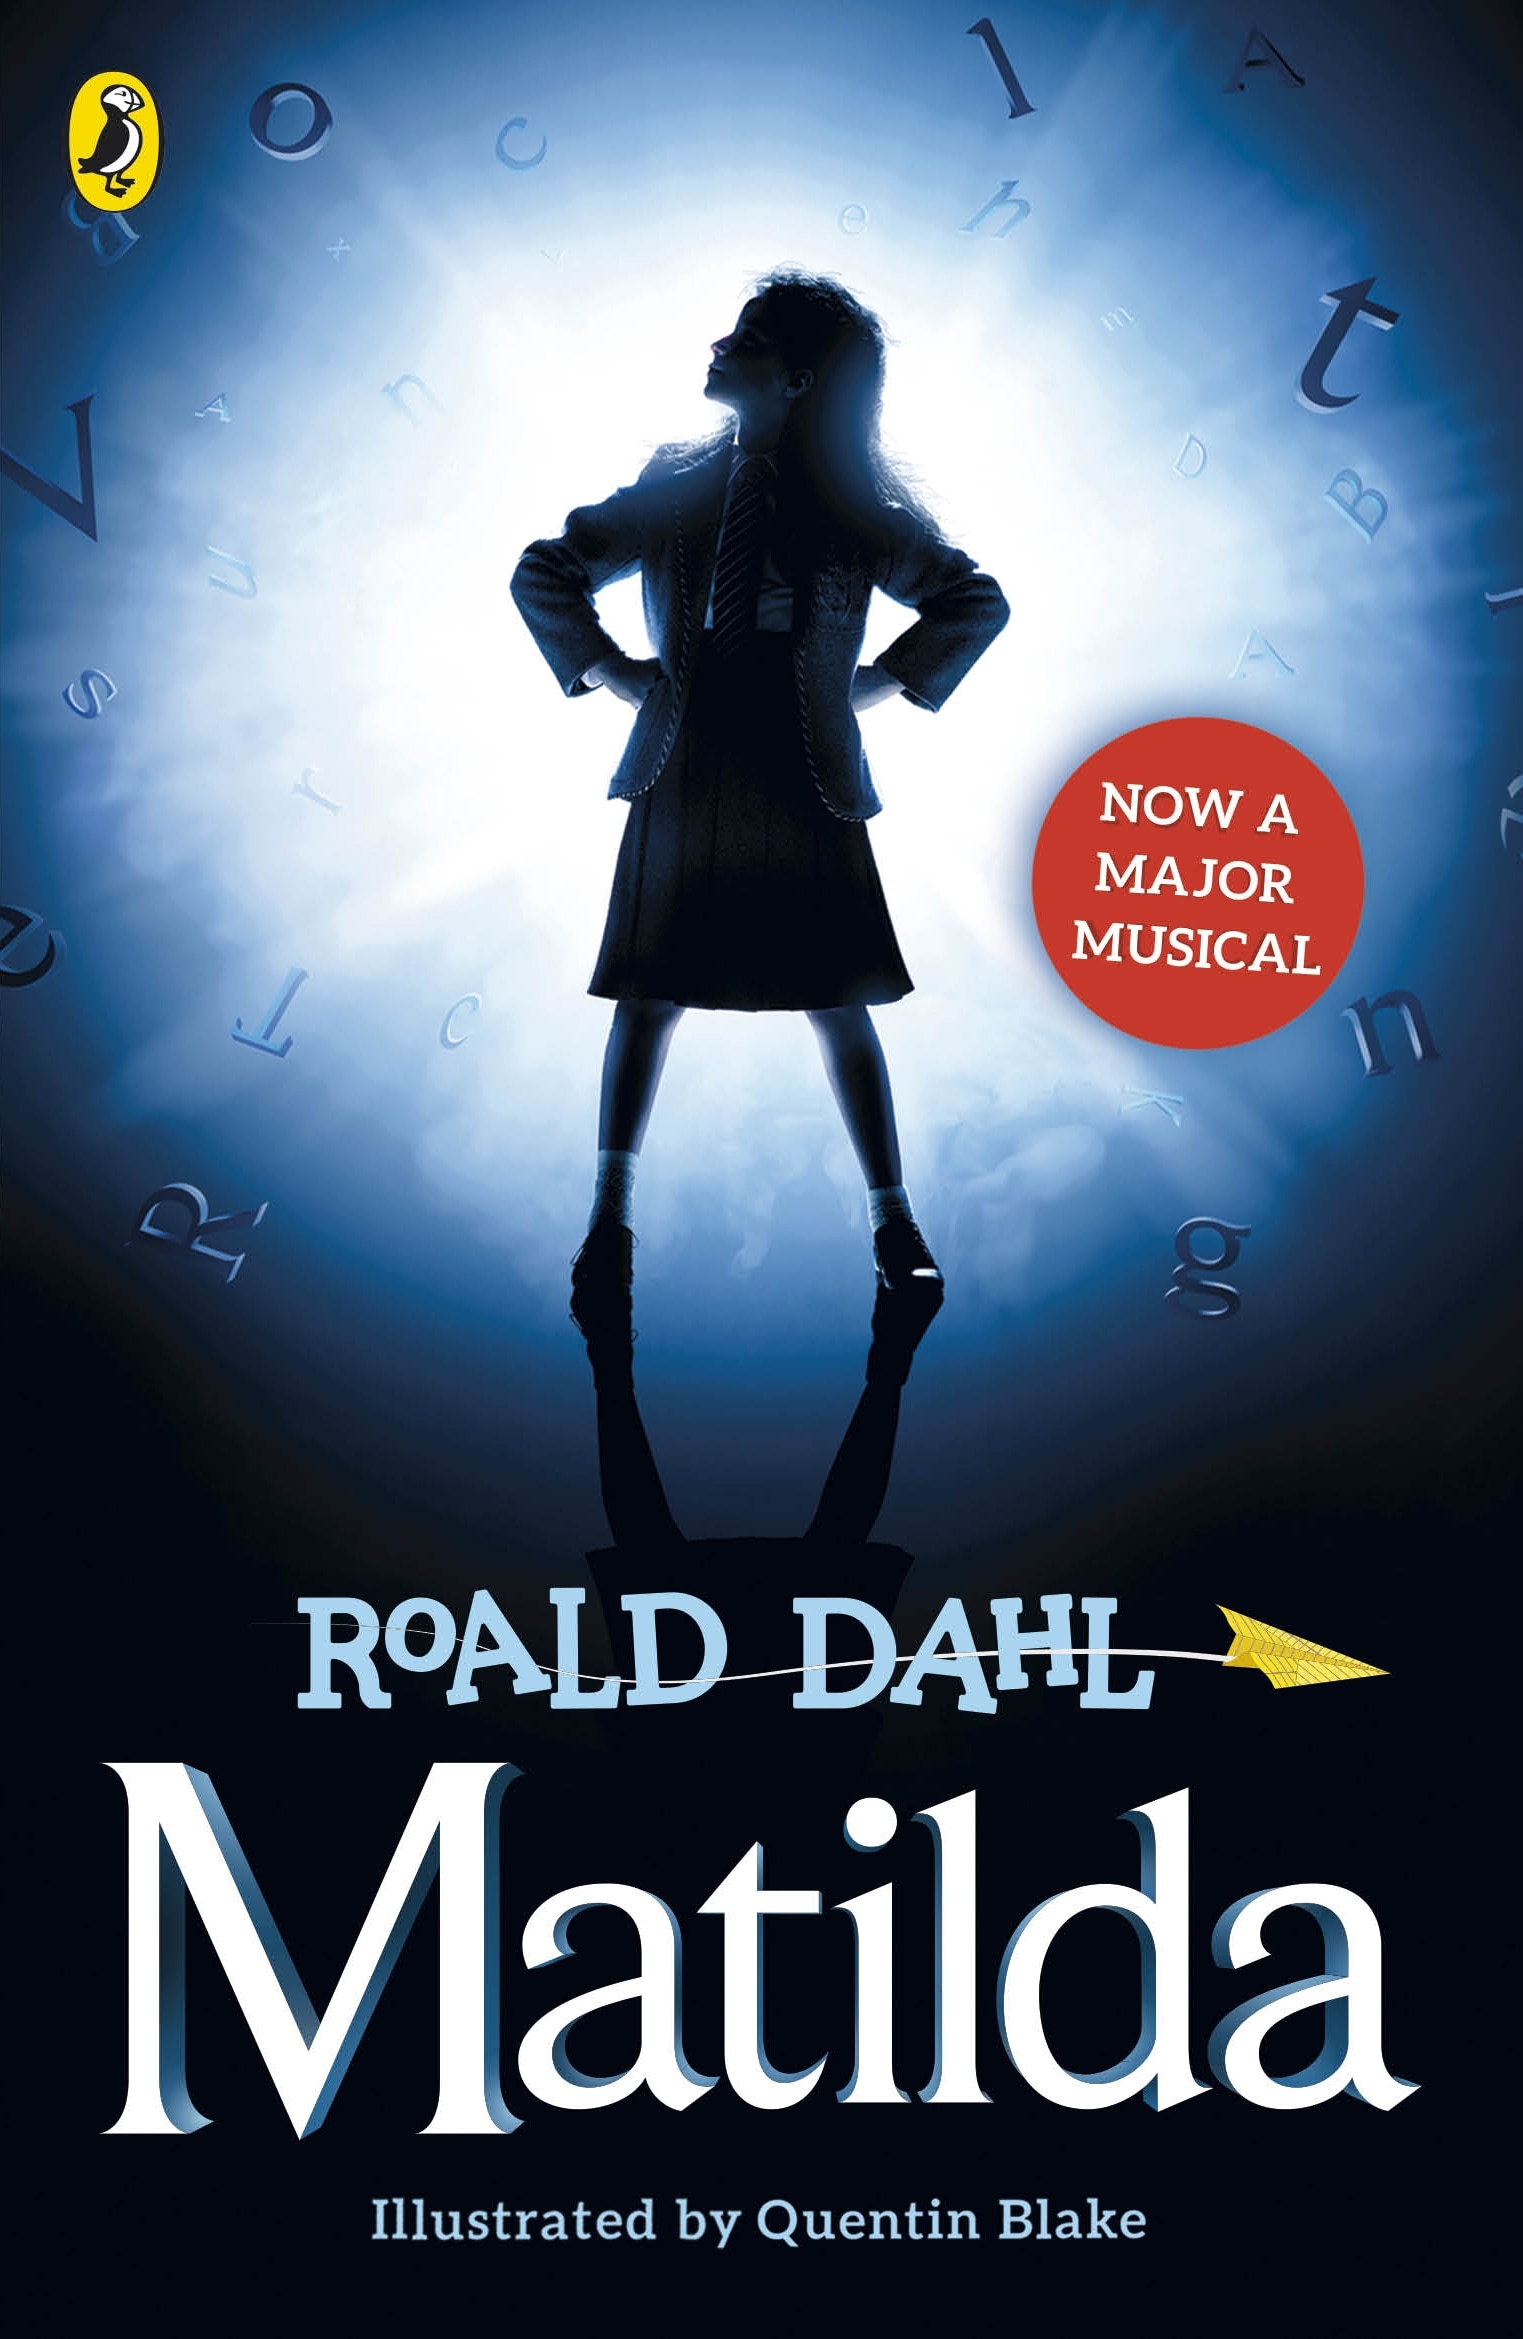 Book “Matilda (Theatre Tie-in)” by Roald Dahl — November 3, 2011